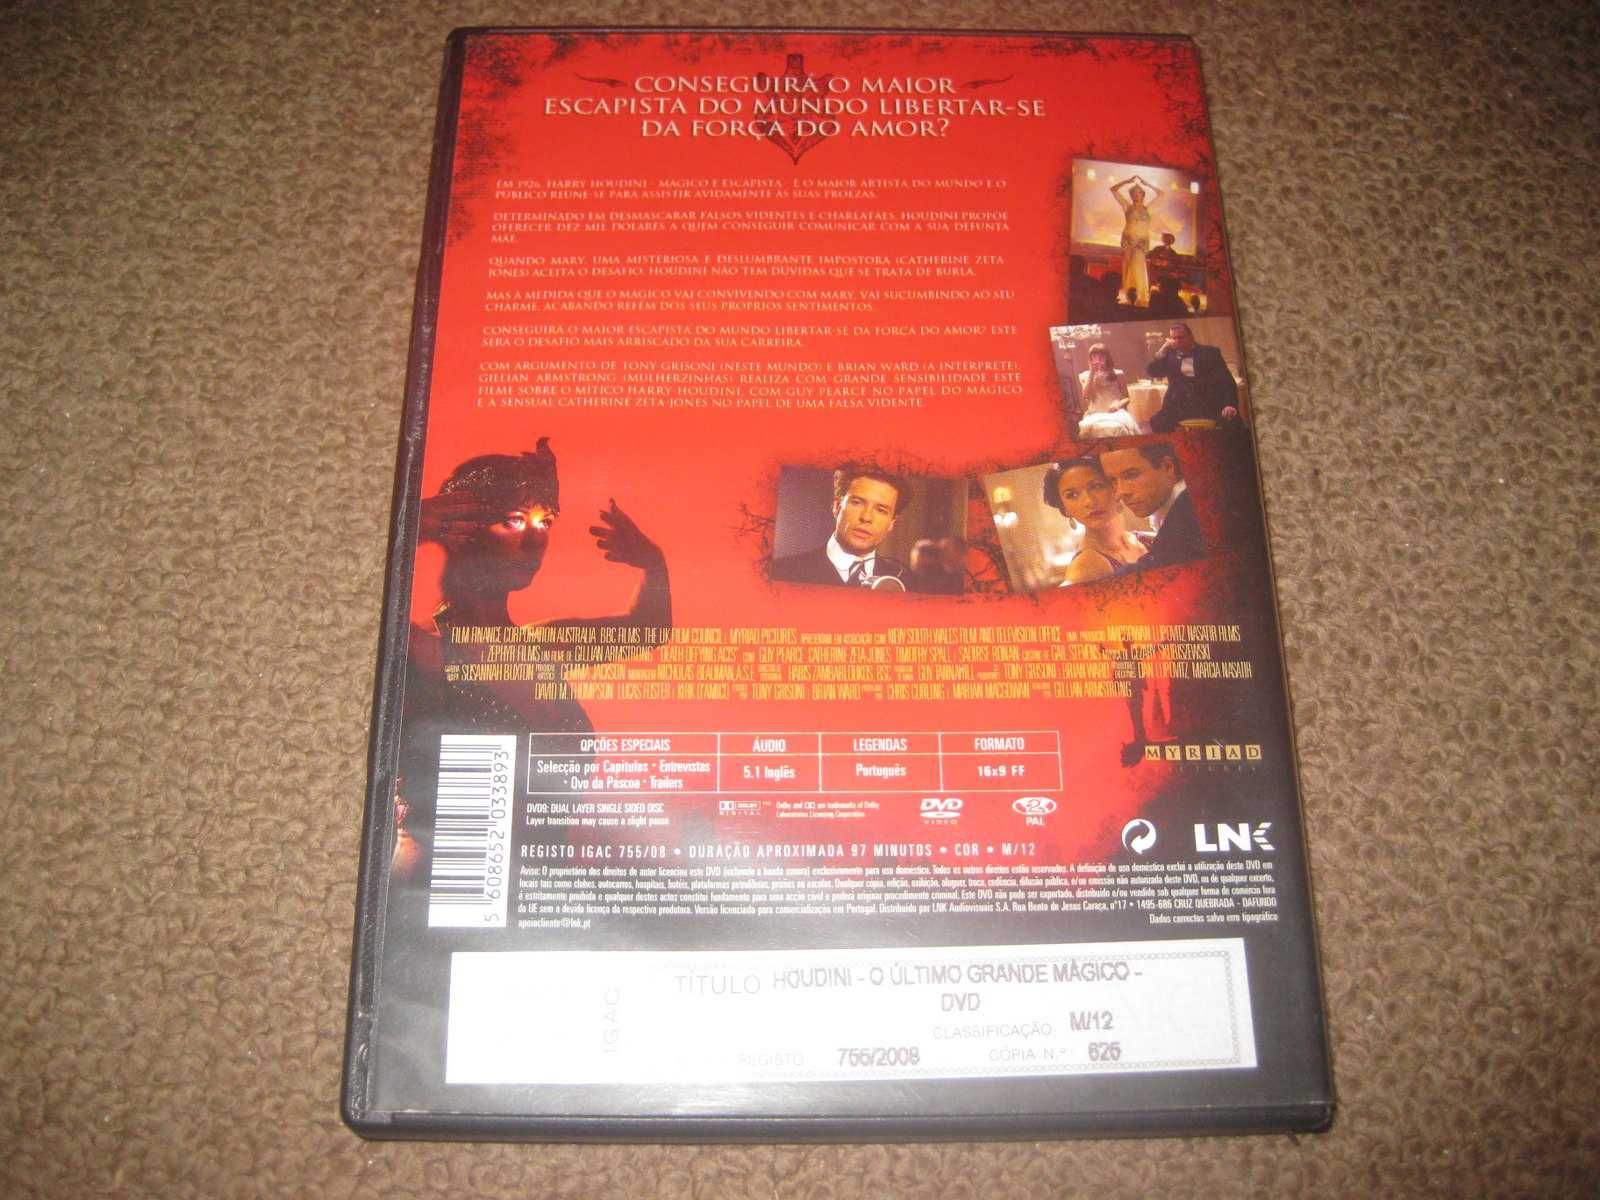 DVD "Houdini - O Último Grande Mágico" com Catherine Zeta-Jones